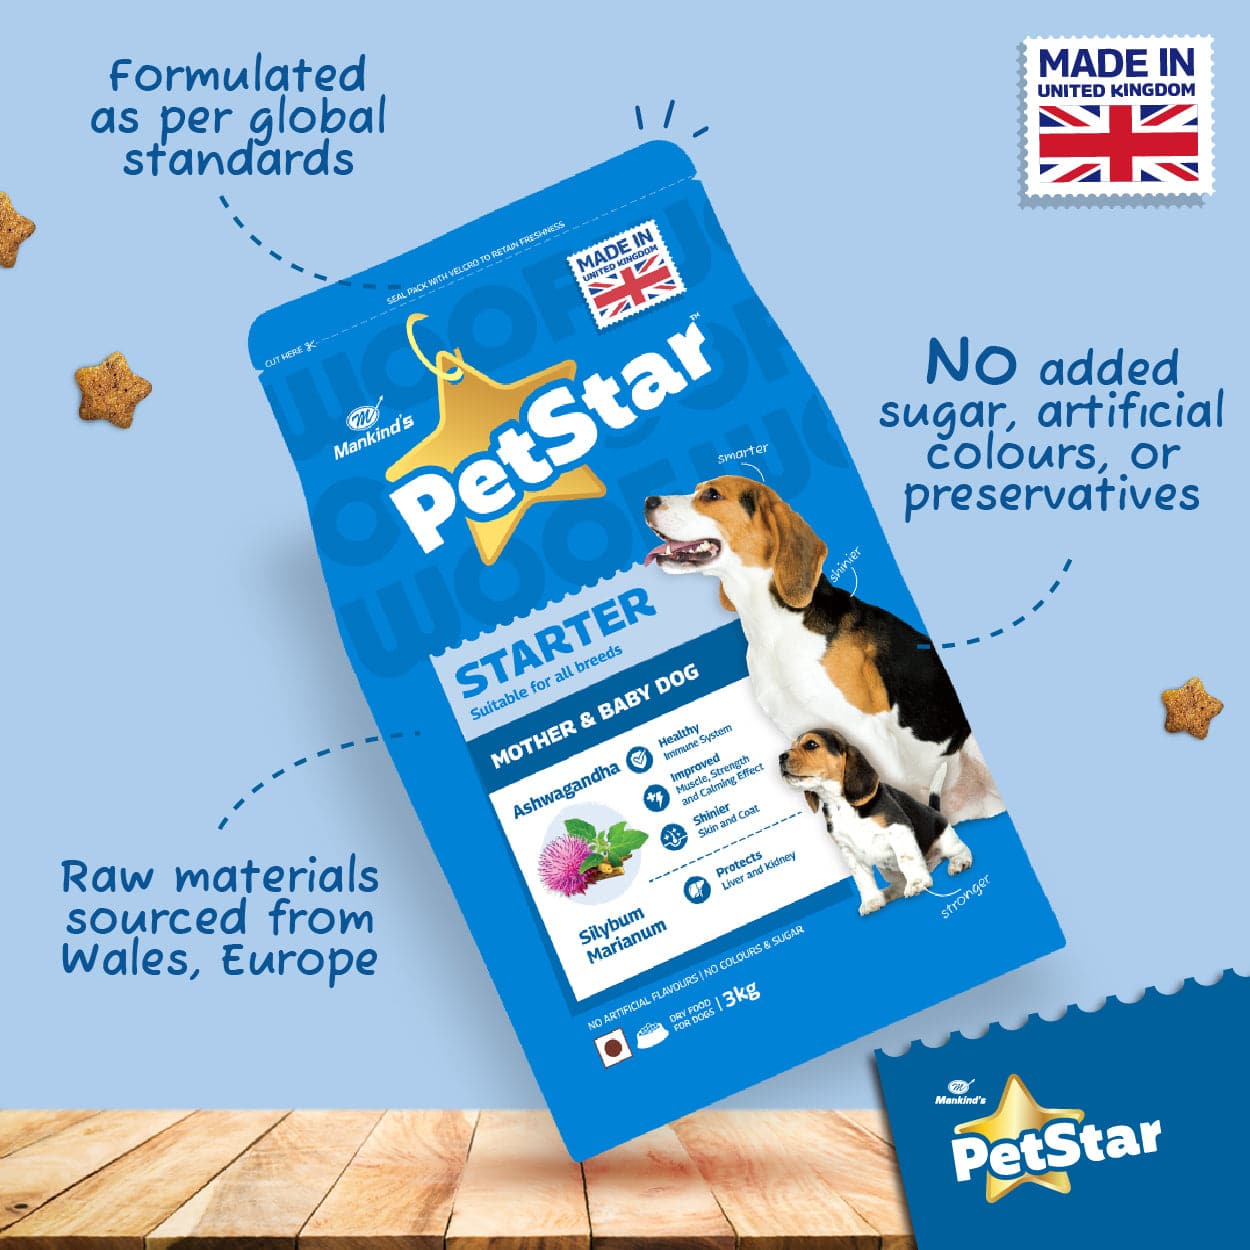 Mankind Petstar Starter Mother & Baby Dog Dry Food (Buy 1 Get 1 Free)